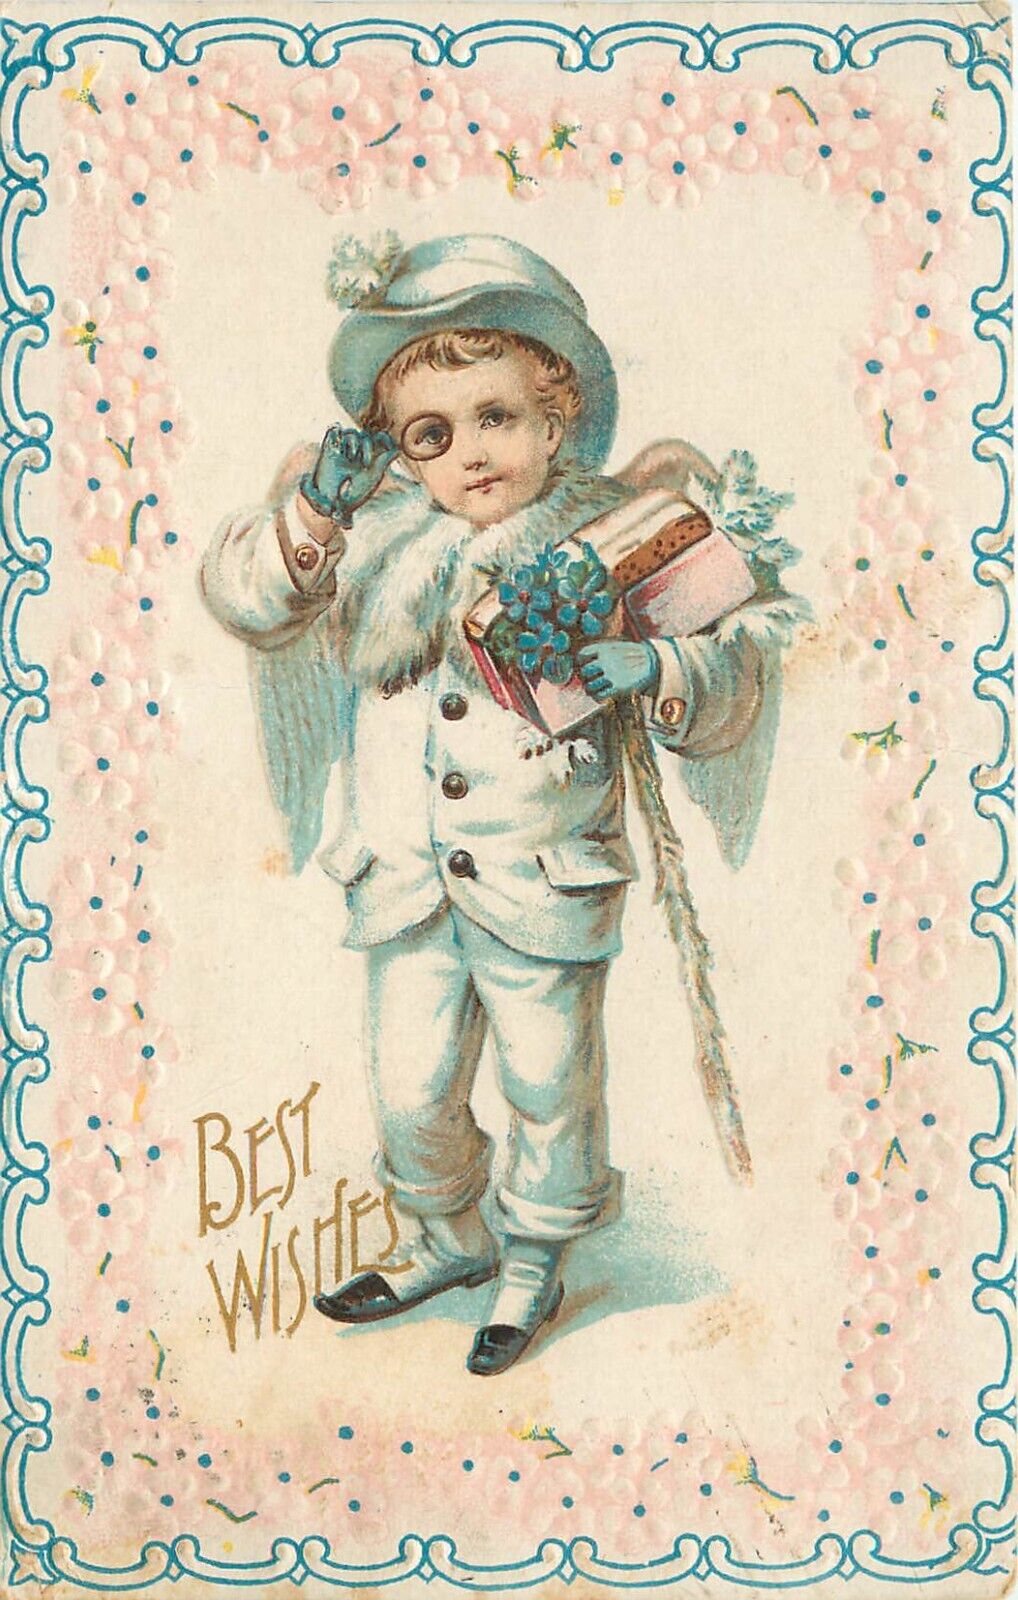 c1907 Embossed Best Wishes Postcard Fancy Boy in White Suit w/ Monocle & Flowers